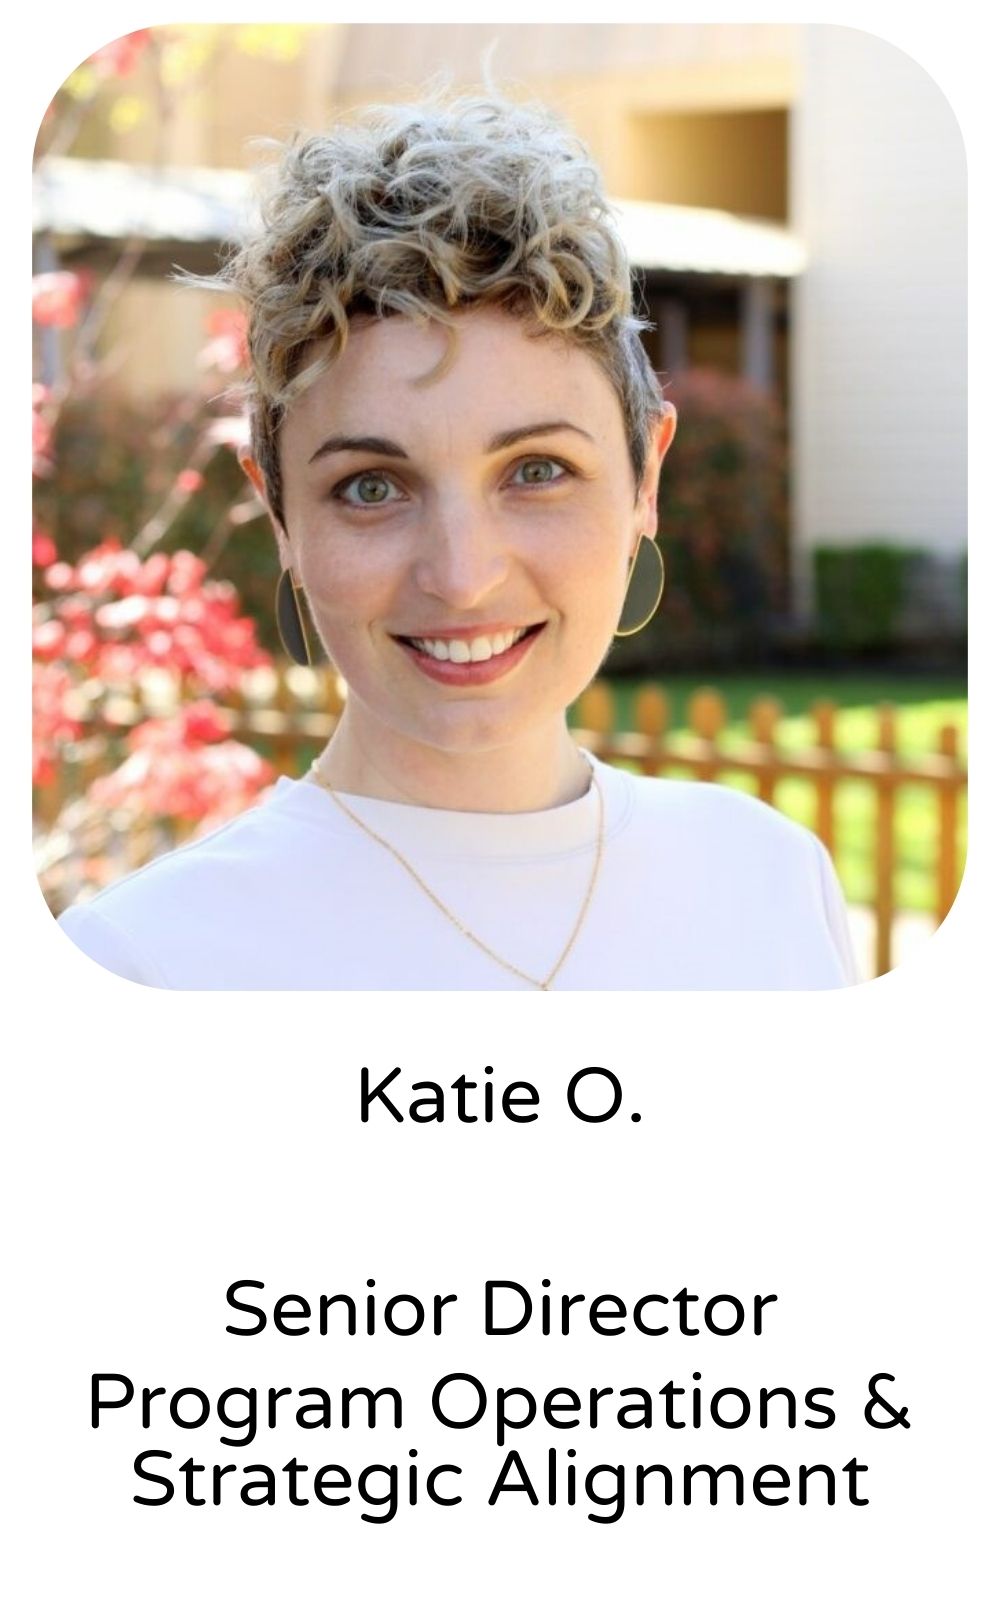 Katie O, Senior Director, Program Operations & Strategic Alignment